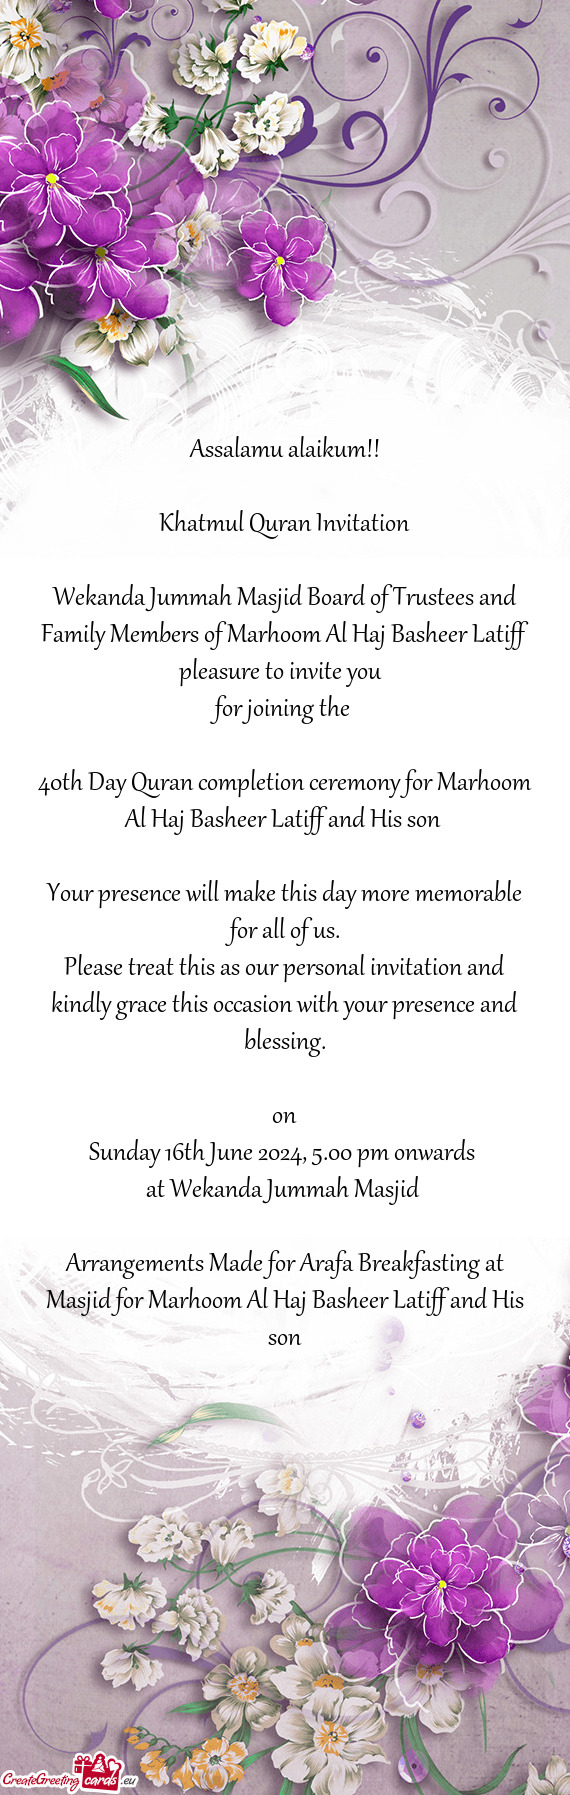 Wekanda Jummah Masjid Board of Trustees and Family Members of Marhoom Al Haj Basheer Latiff pleasure